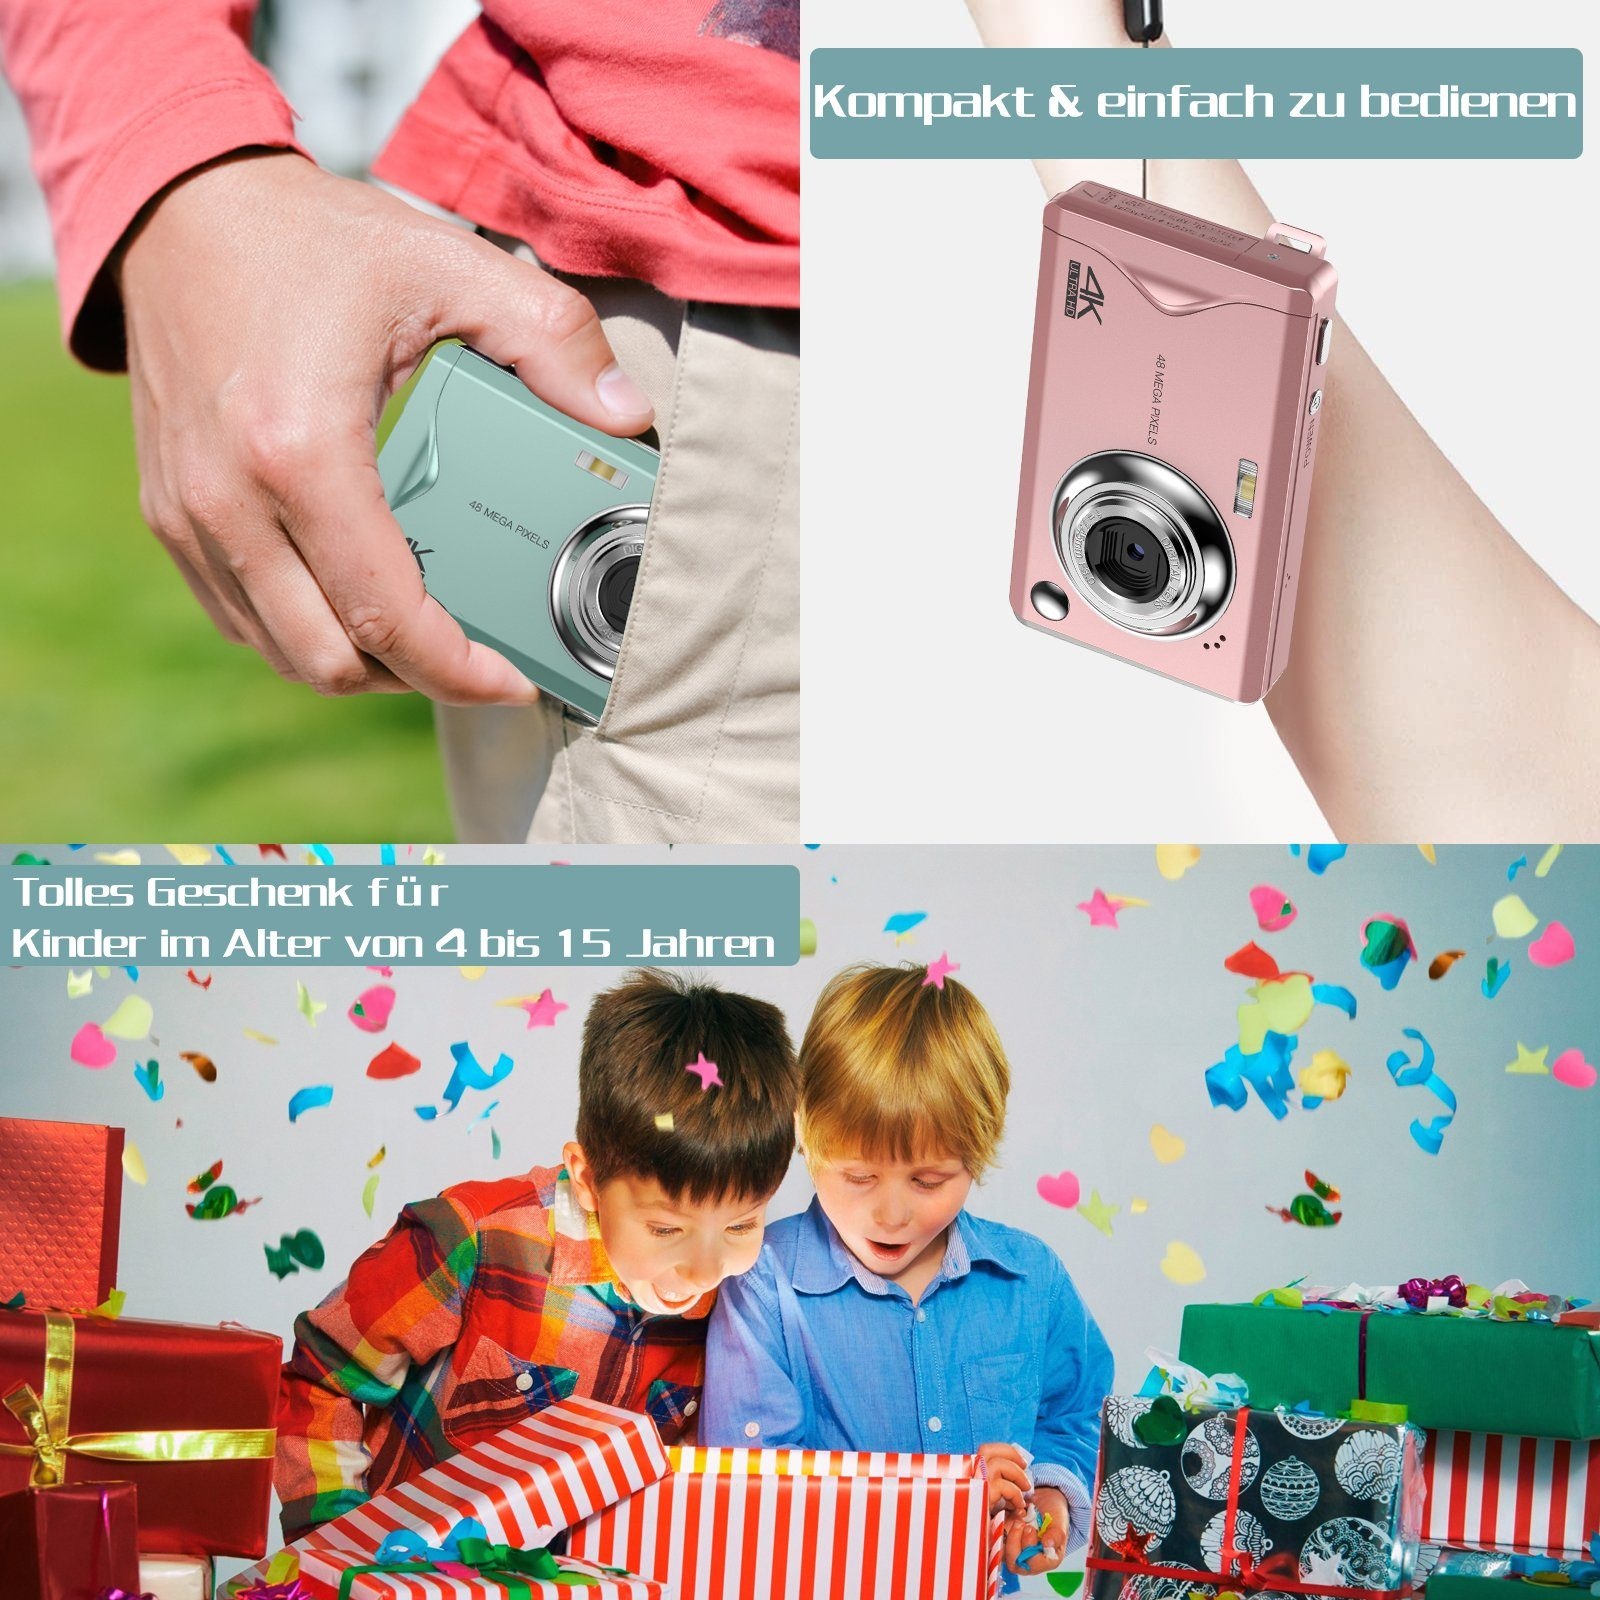 LINGDA 16-facher Digitalzoom – 48 Rosa Kompaktkamera MP Fotoauflösung